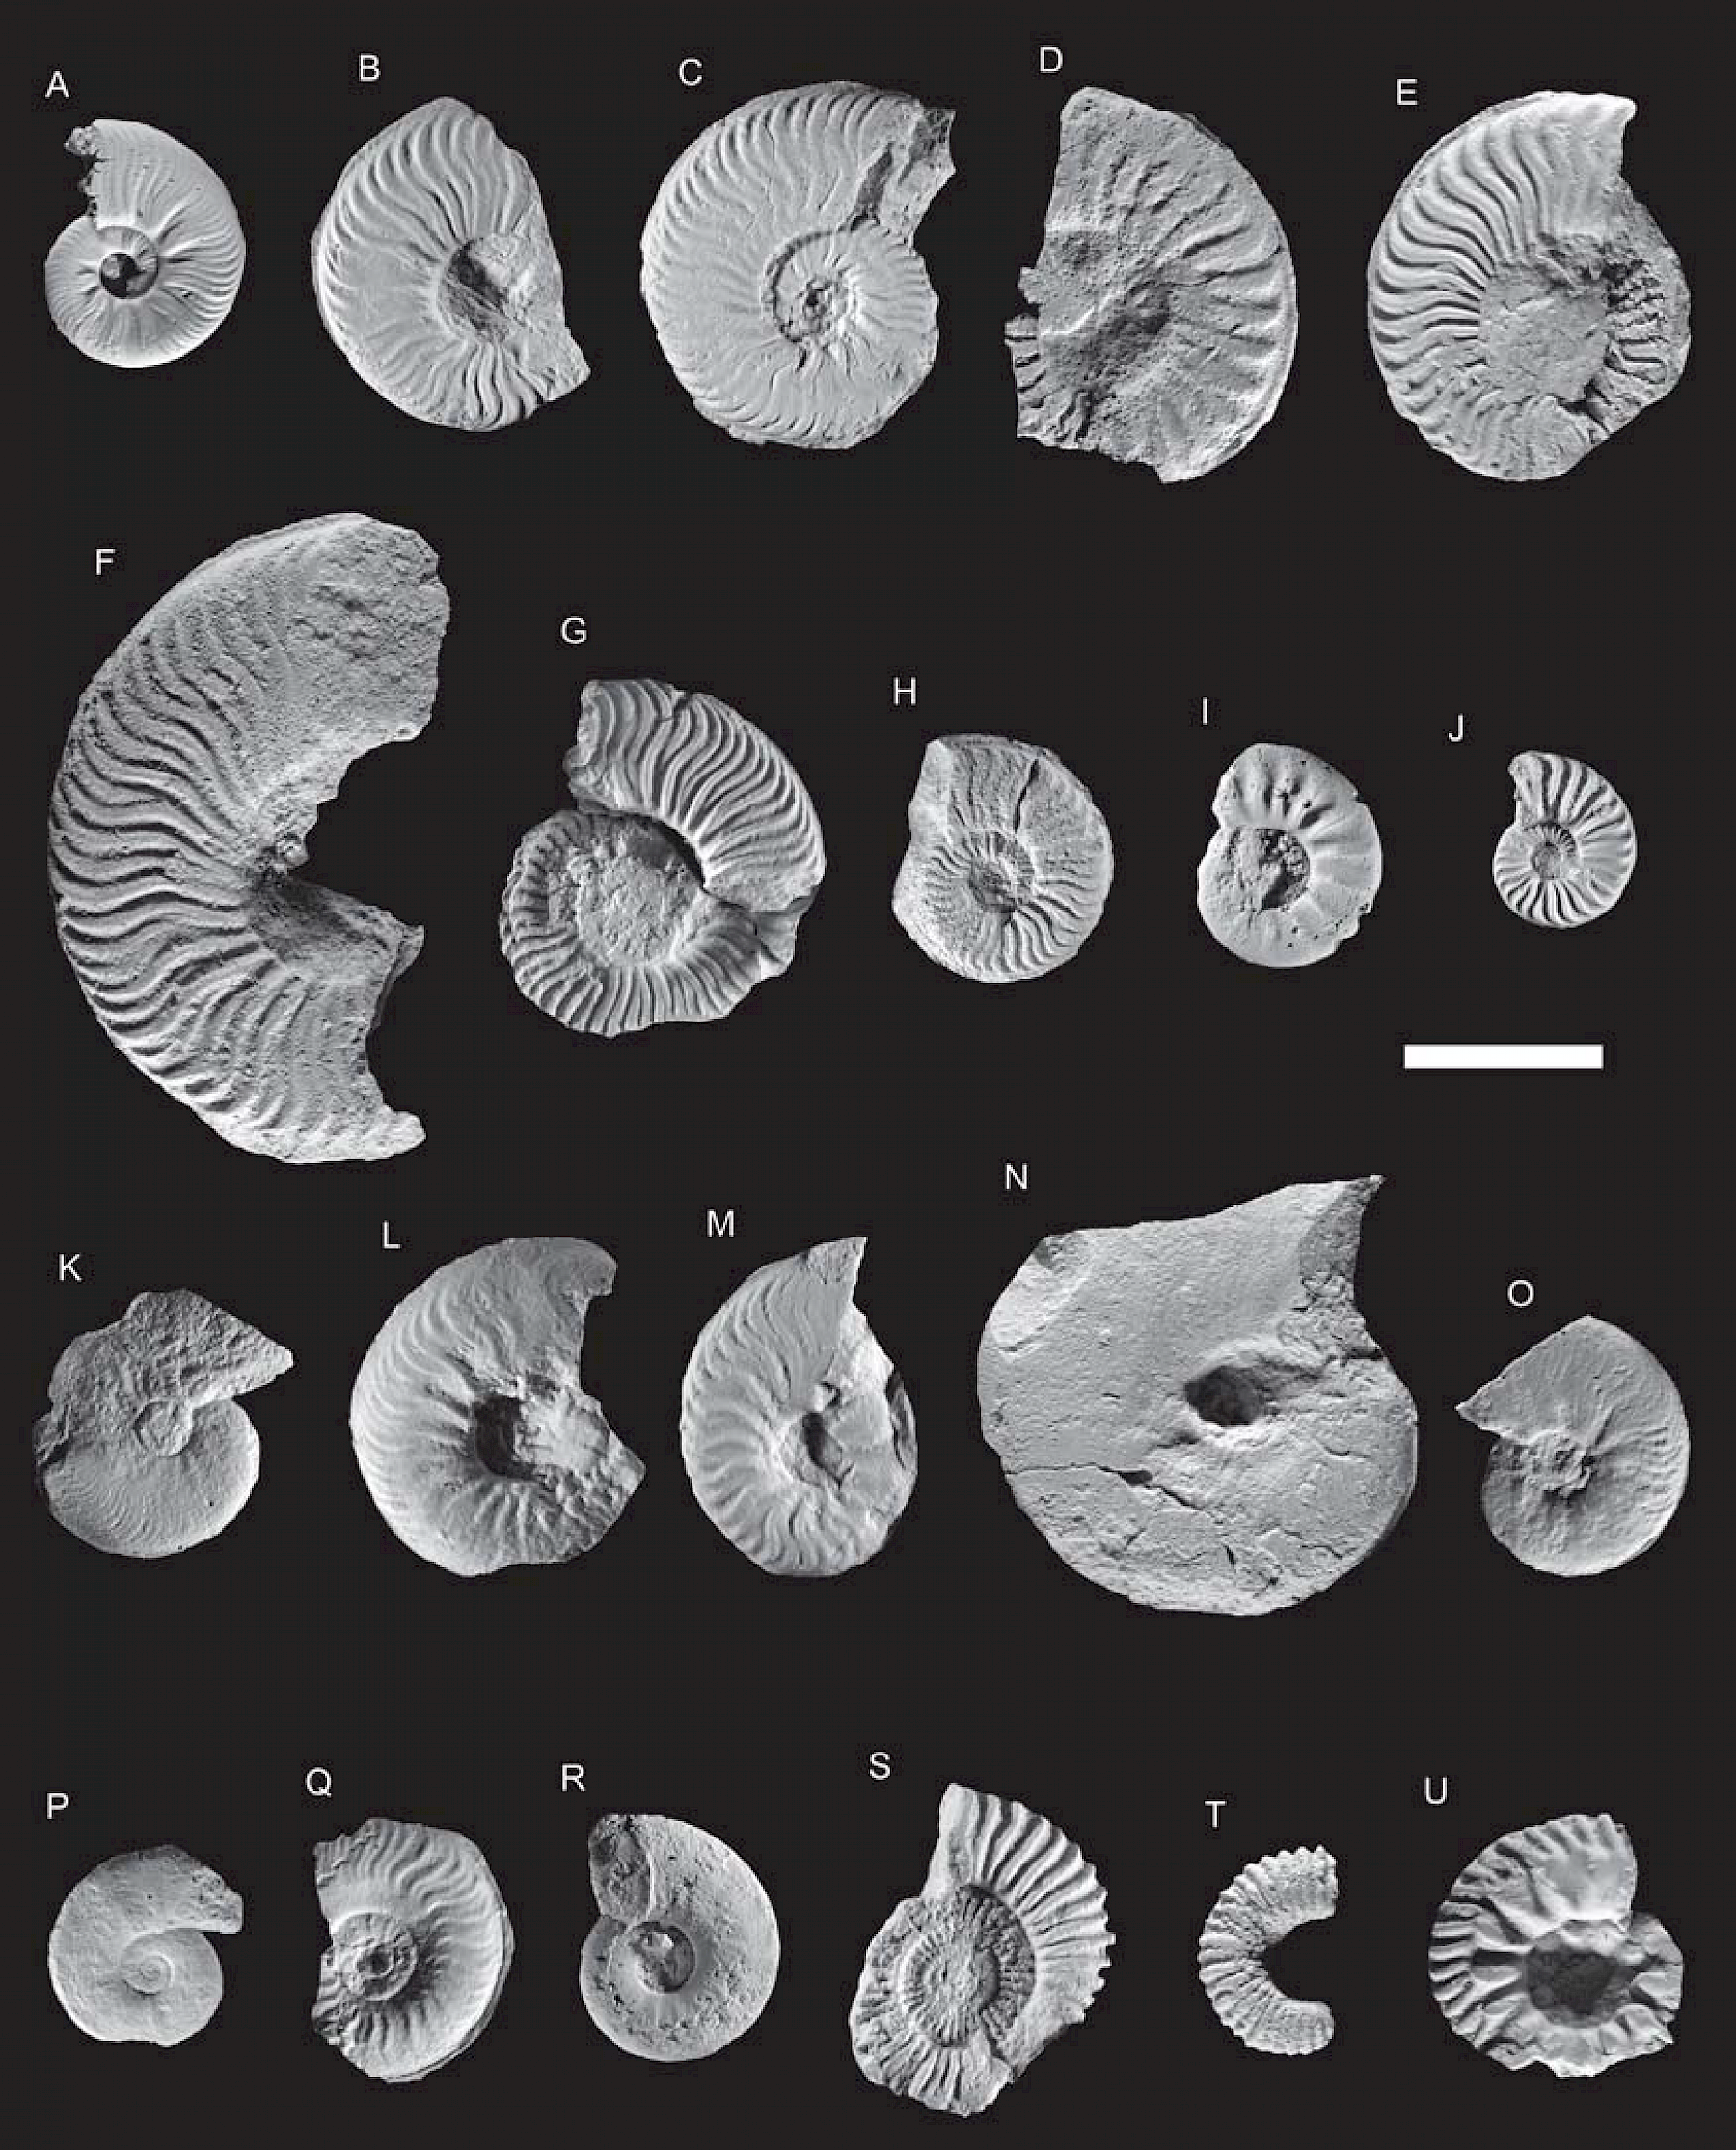 Amonites da passagem Toarciano-Aaleniano do perfil de São Gião (in HENRIQUES, M. H. & CANALES, M. L. (2013)